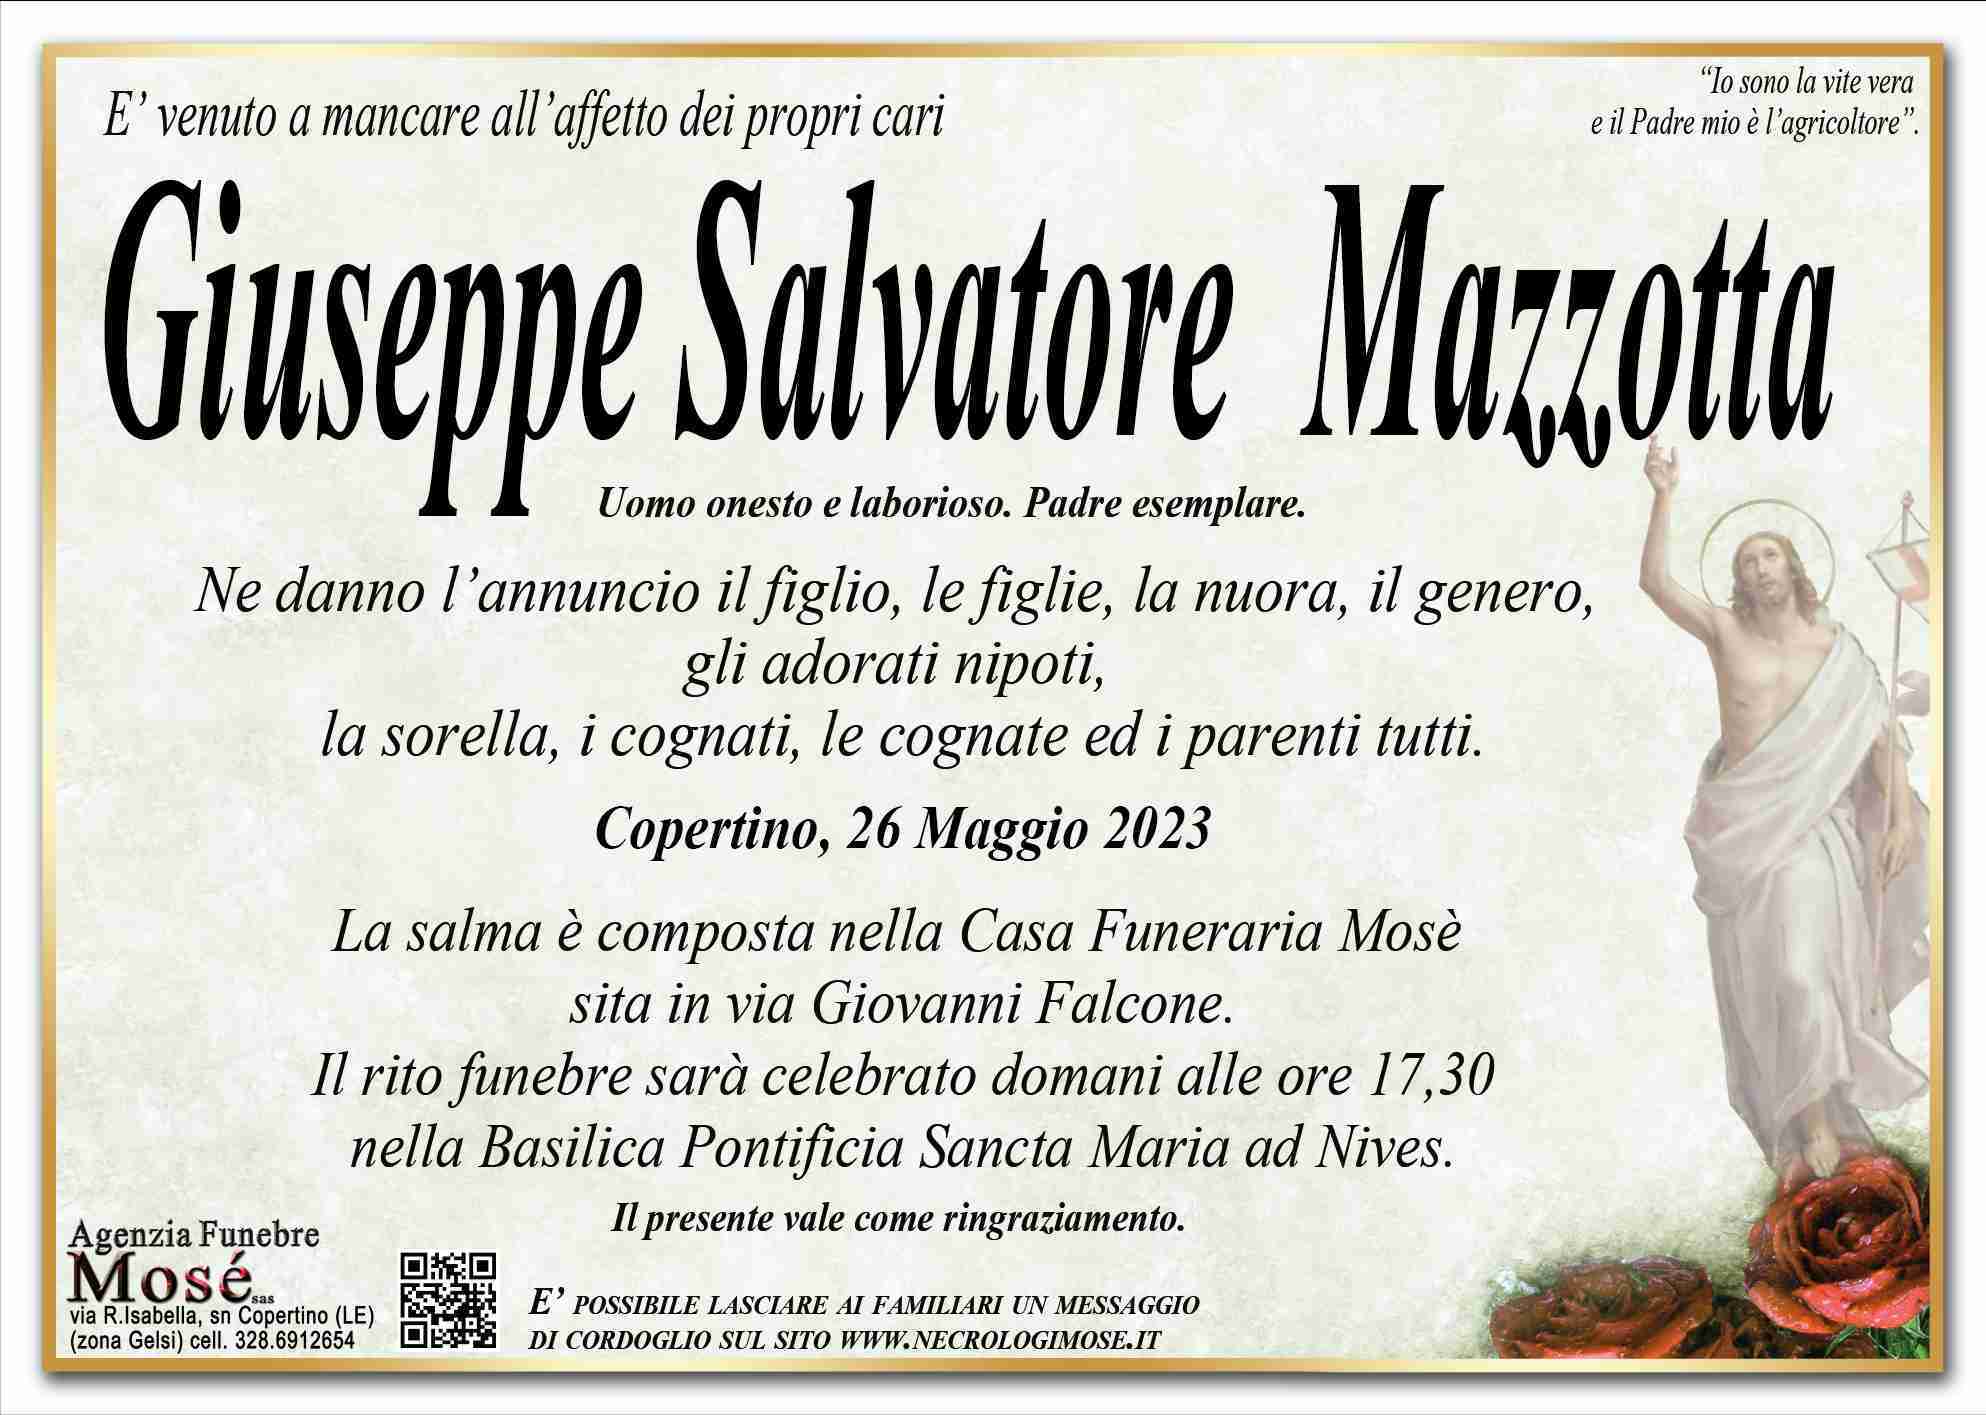 Giuseppe Salvatore Mazzotta